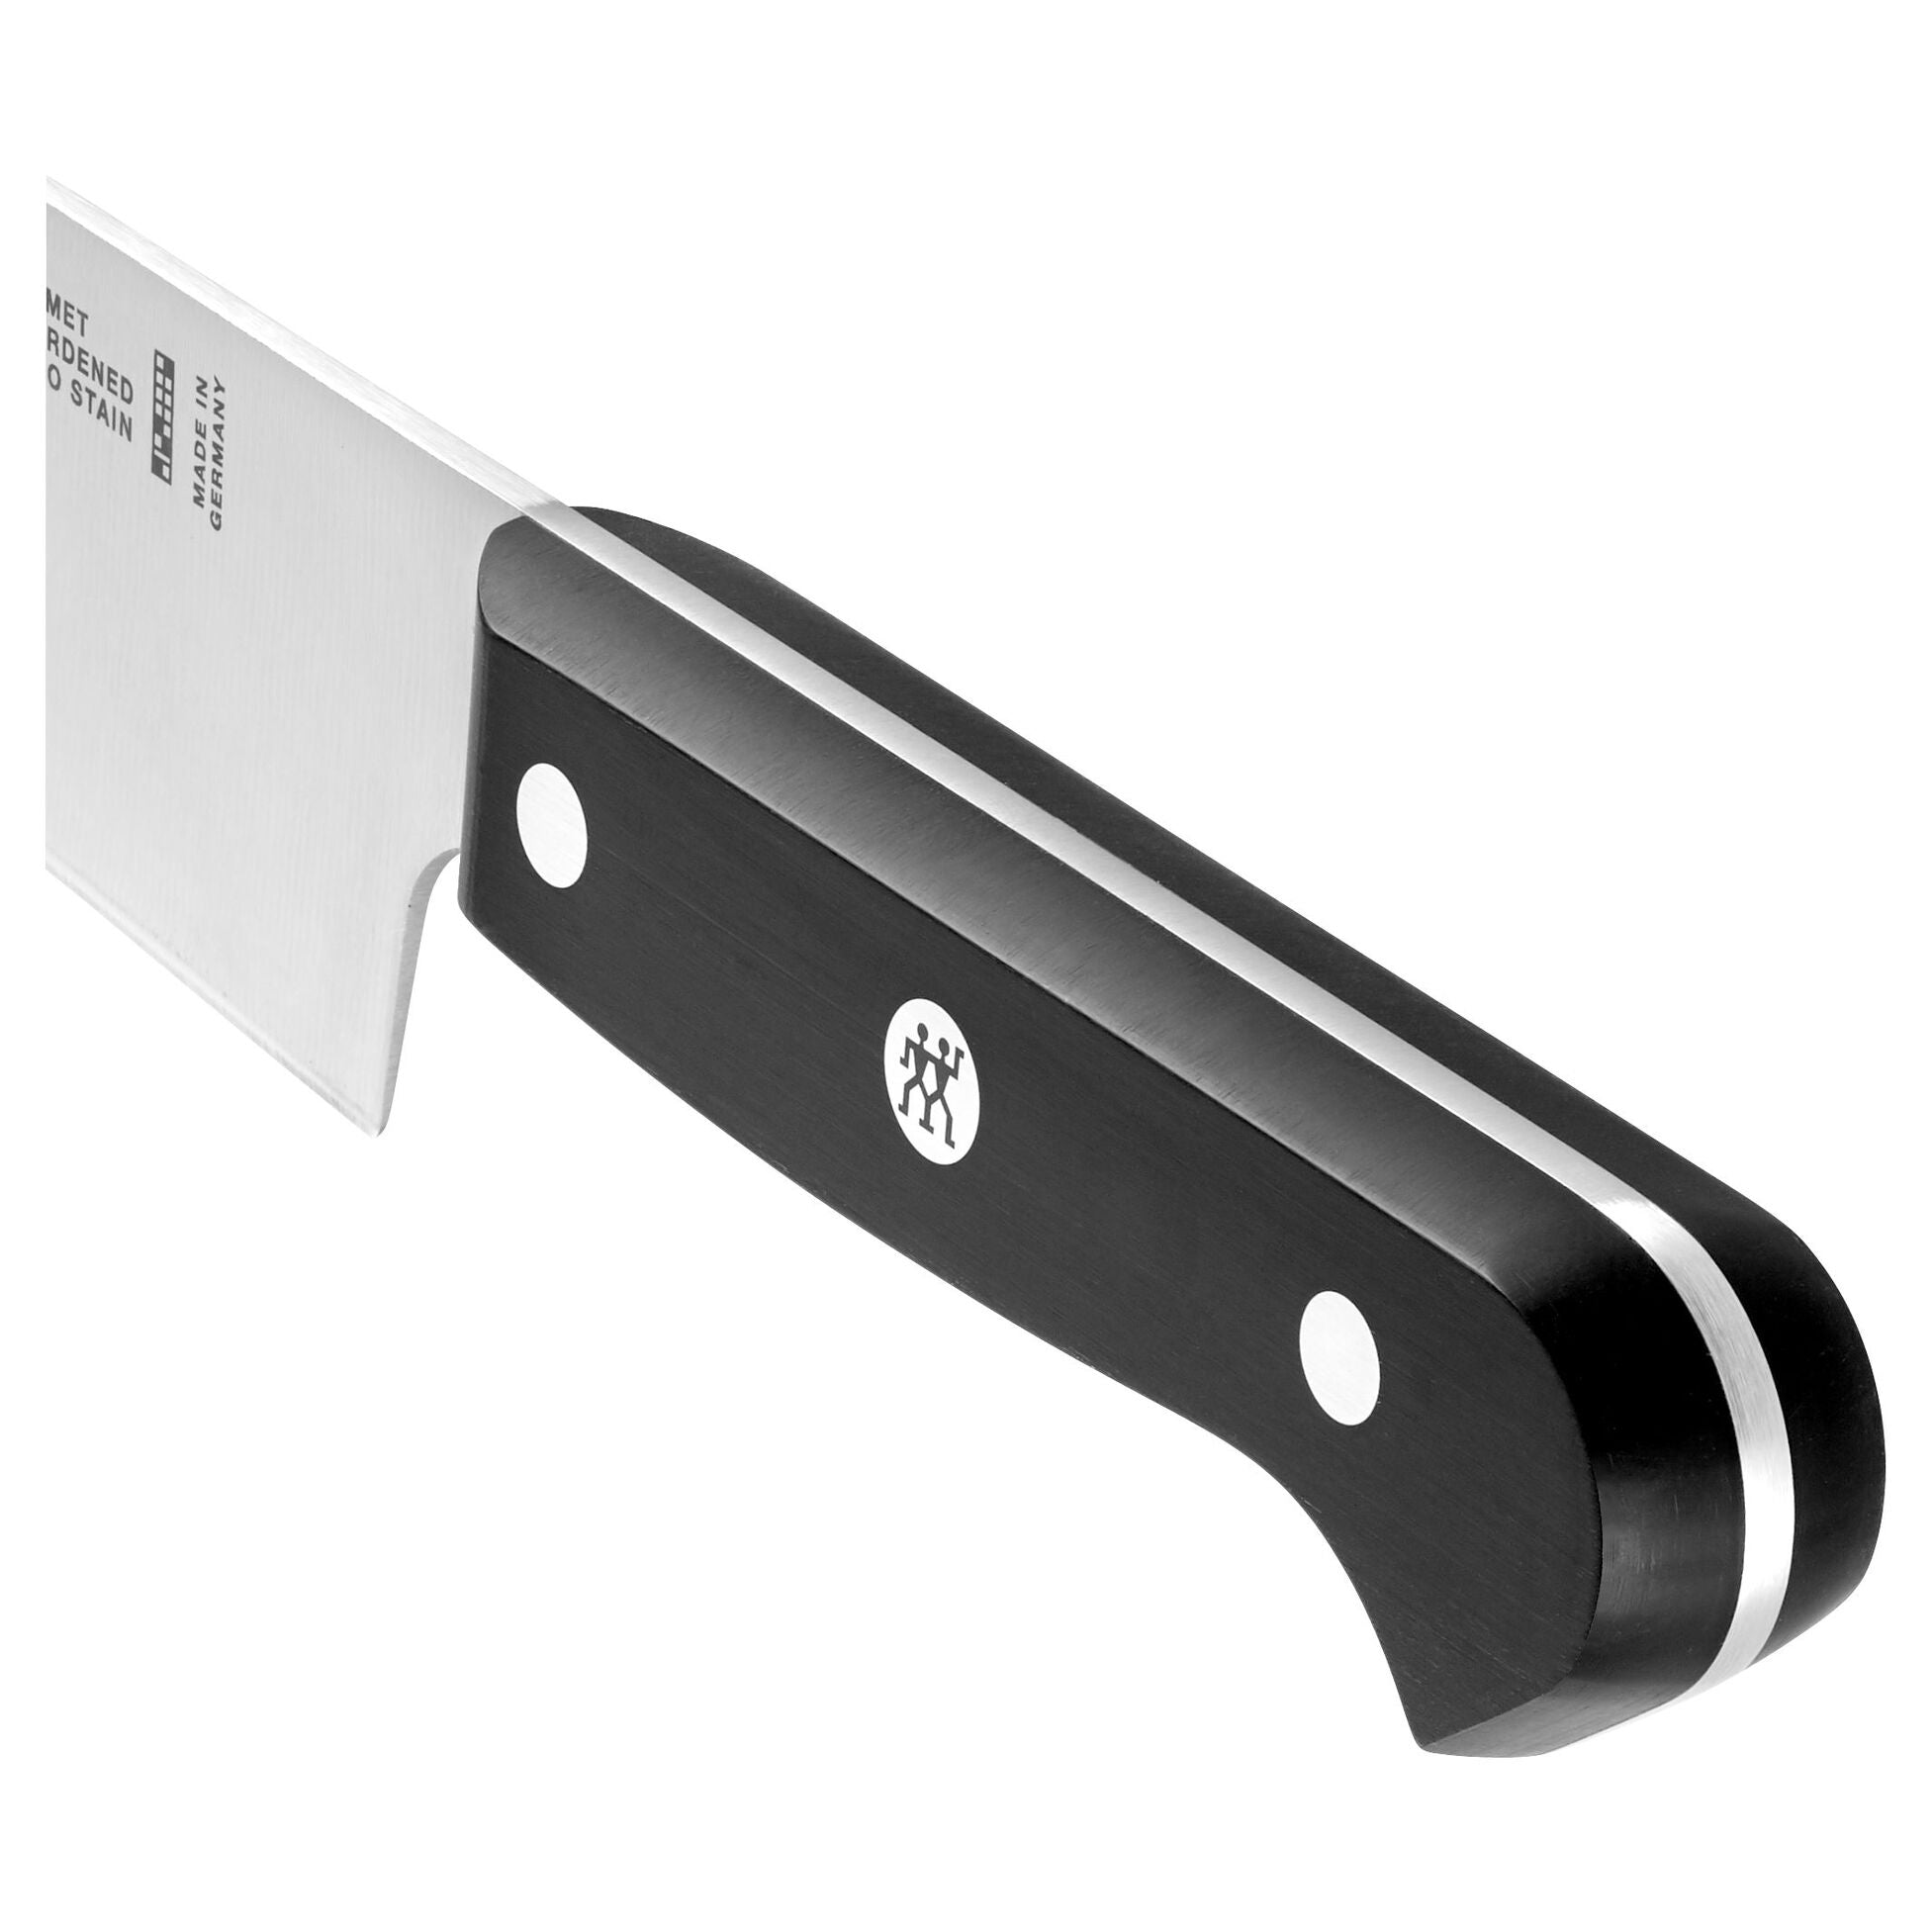 ZWILLING® Gourmet 2 Piece Knife Set